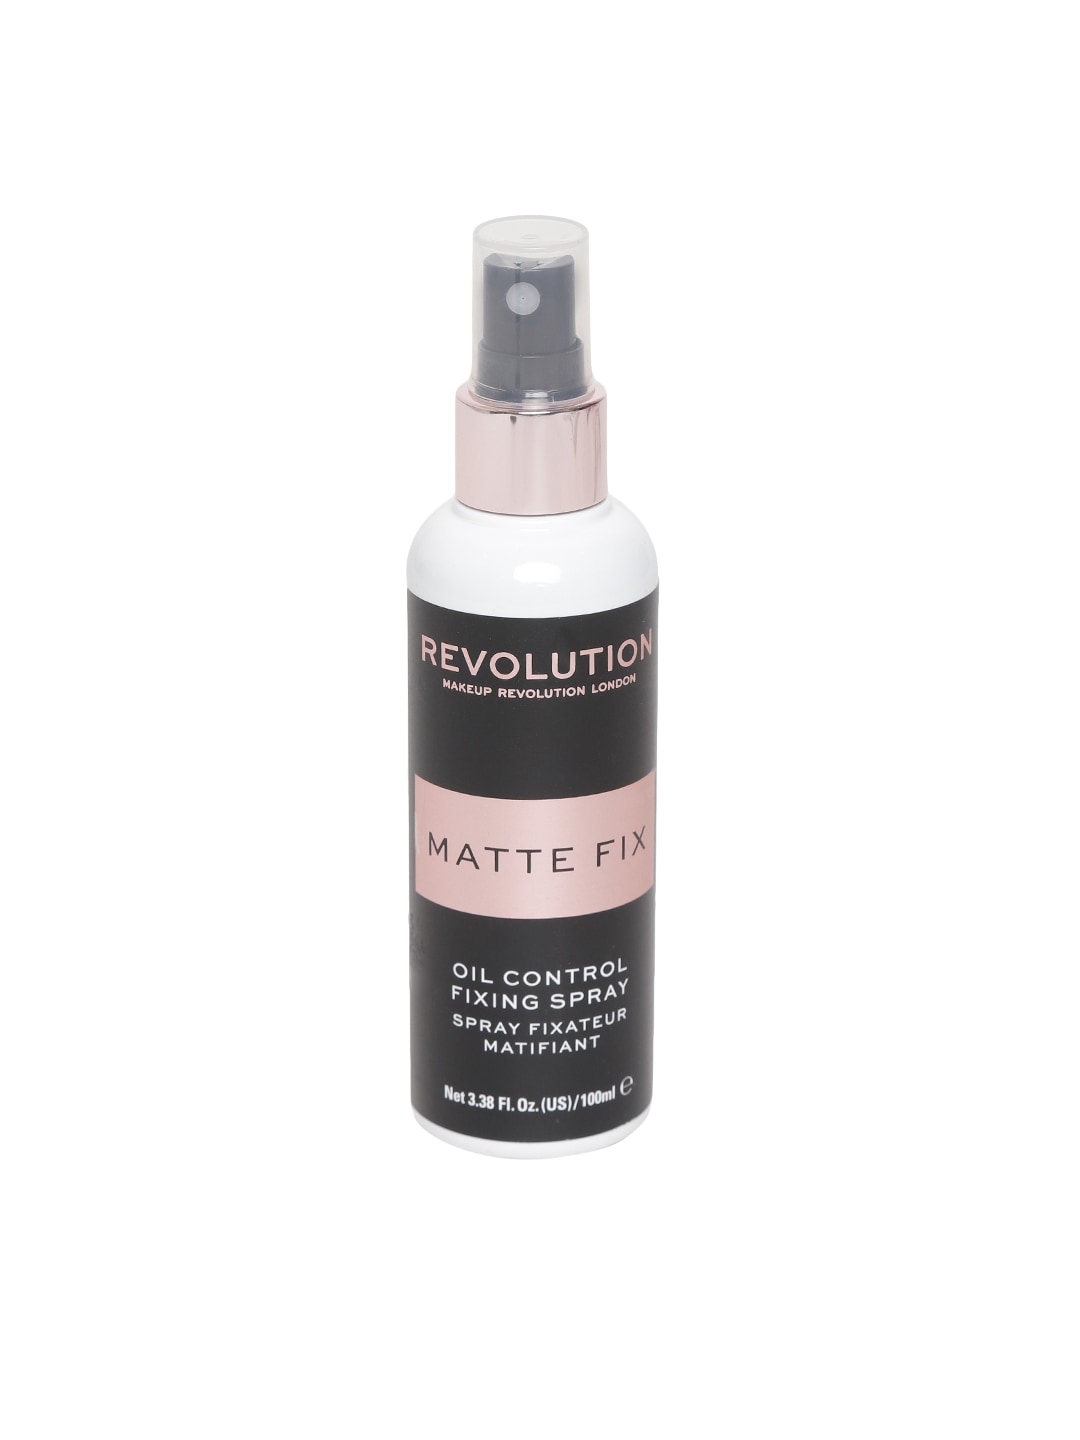 Makeup Revolution London Matte Fix Oil Control Fixing Spray 100ml Price in India